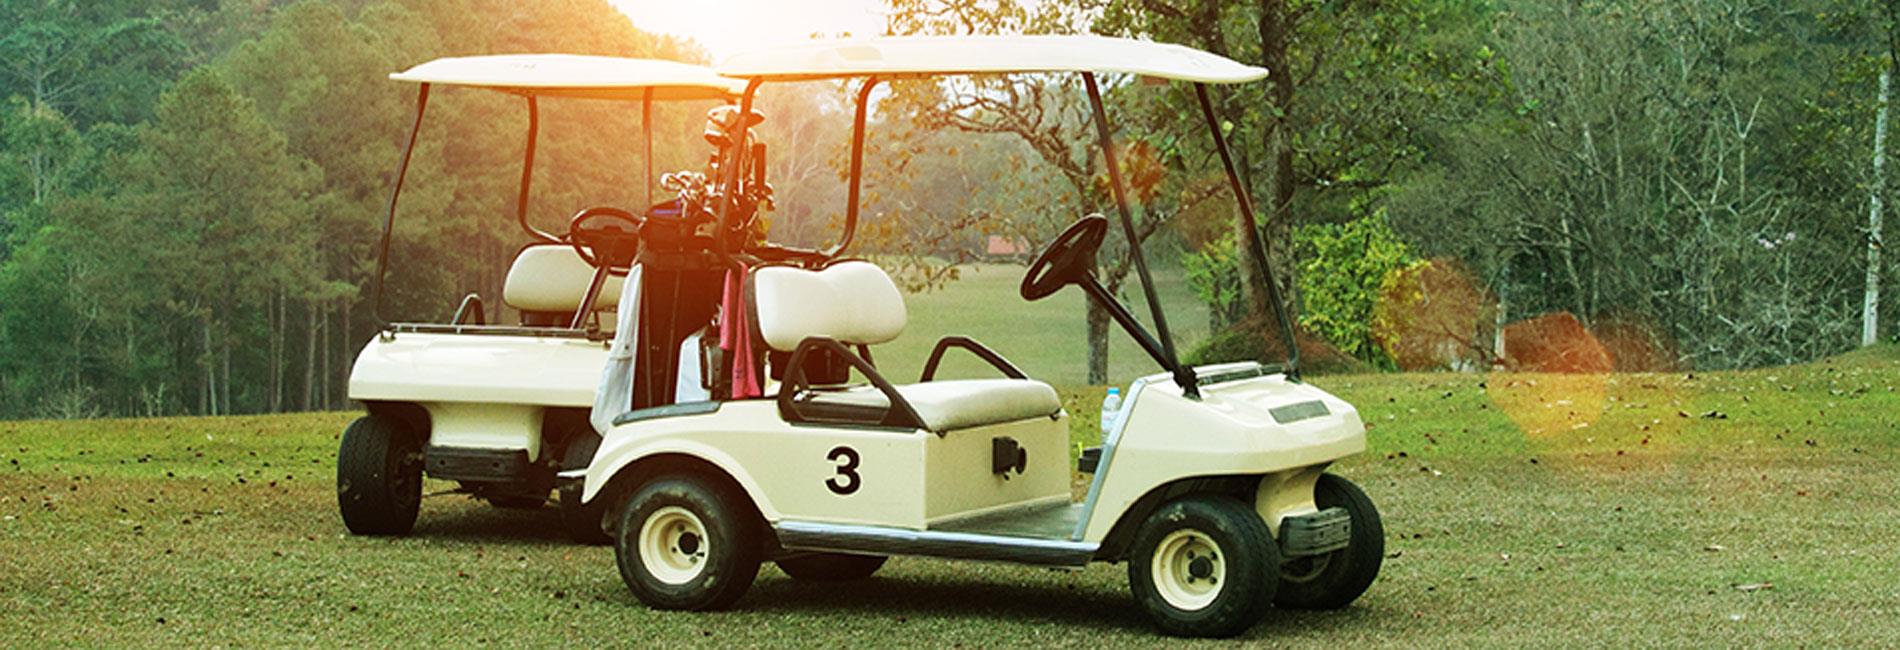 golf-car-usate-e-nuove-febbraio-idea-shop-000.jpg